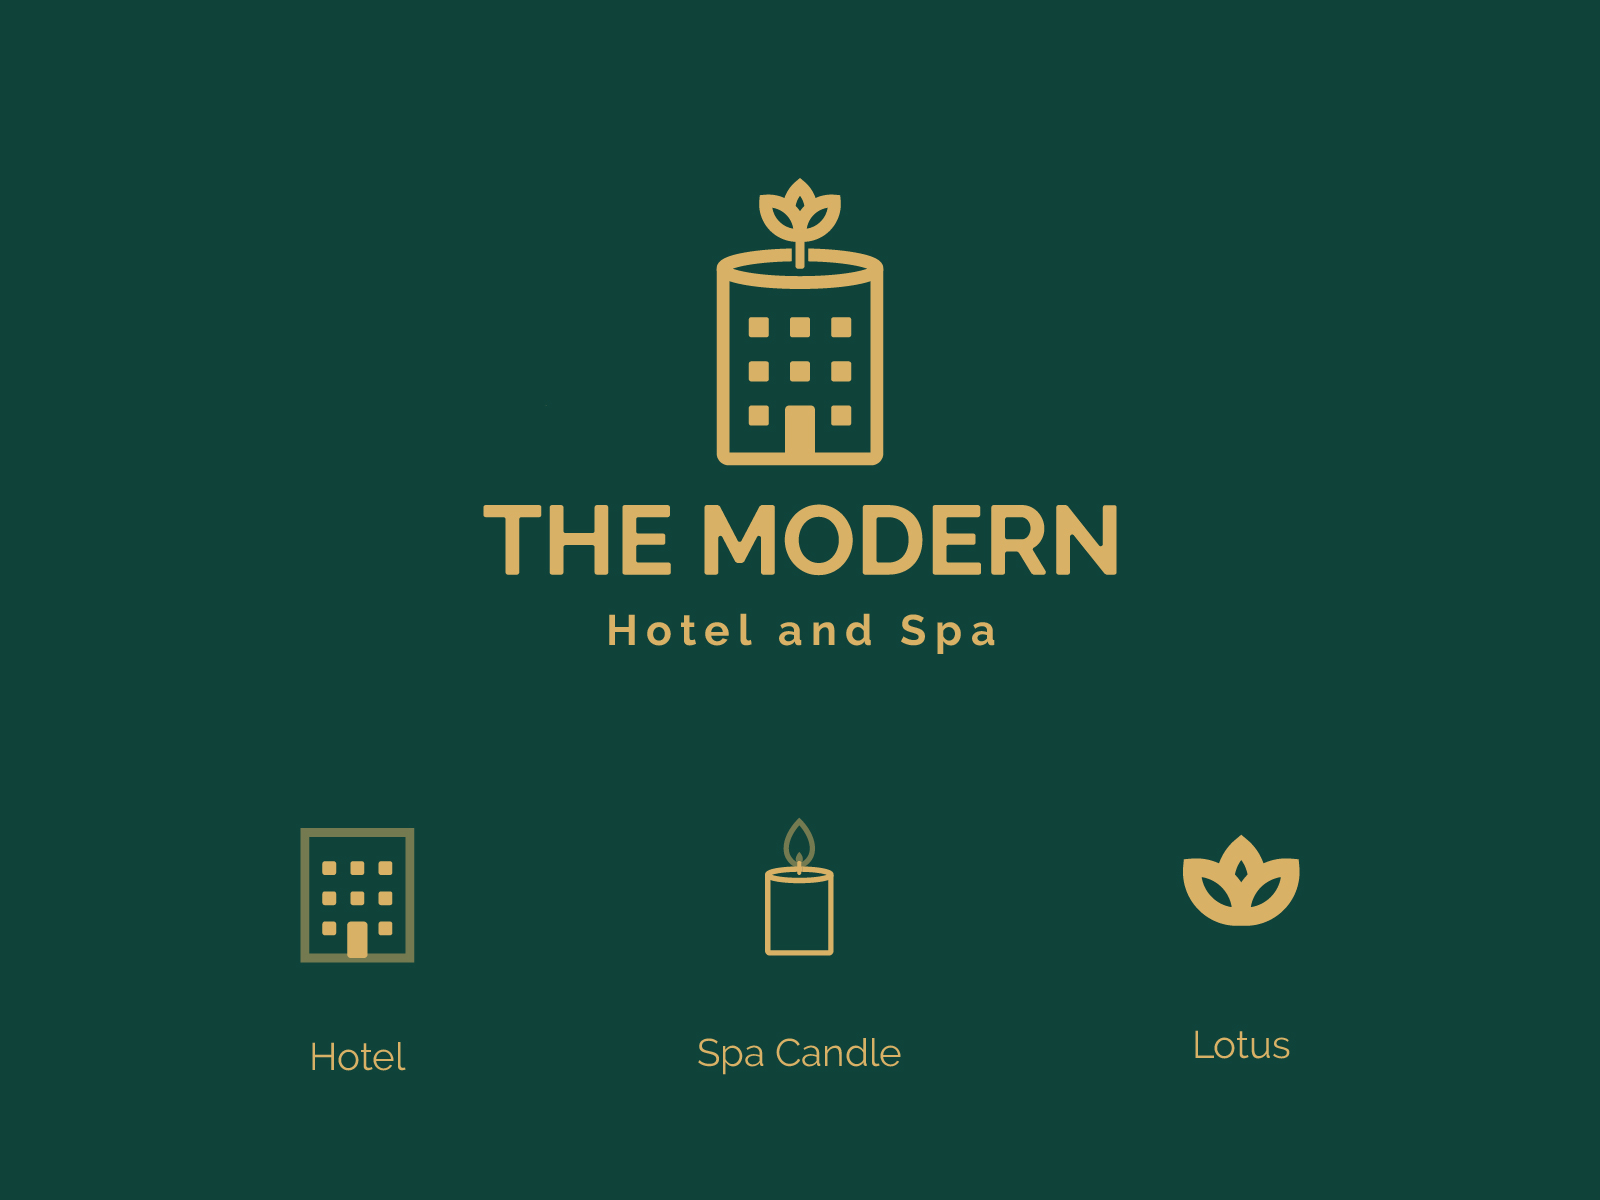 The Modern - Hotel Logo By Hazid Nurdana, Graphic Designer On Dribbble